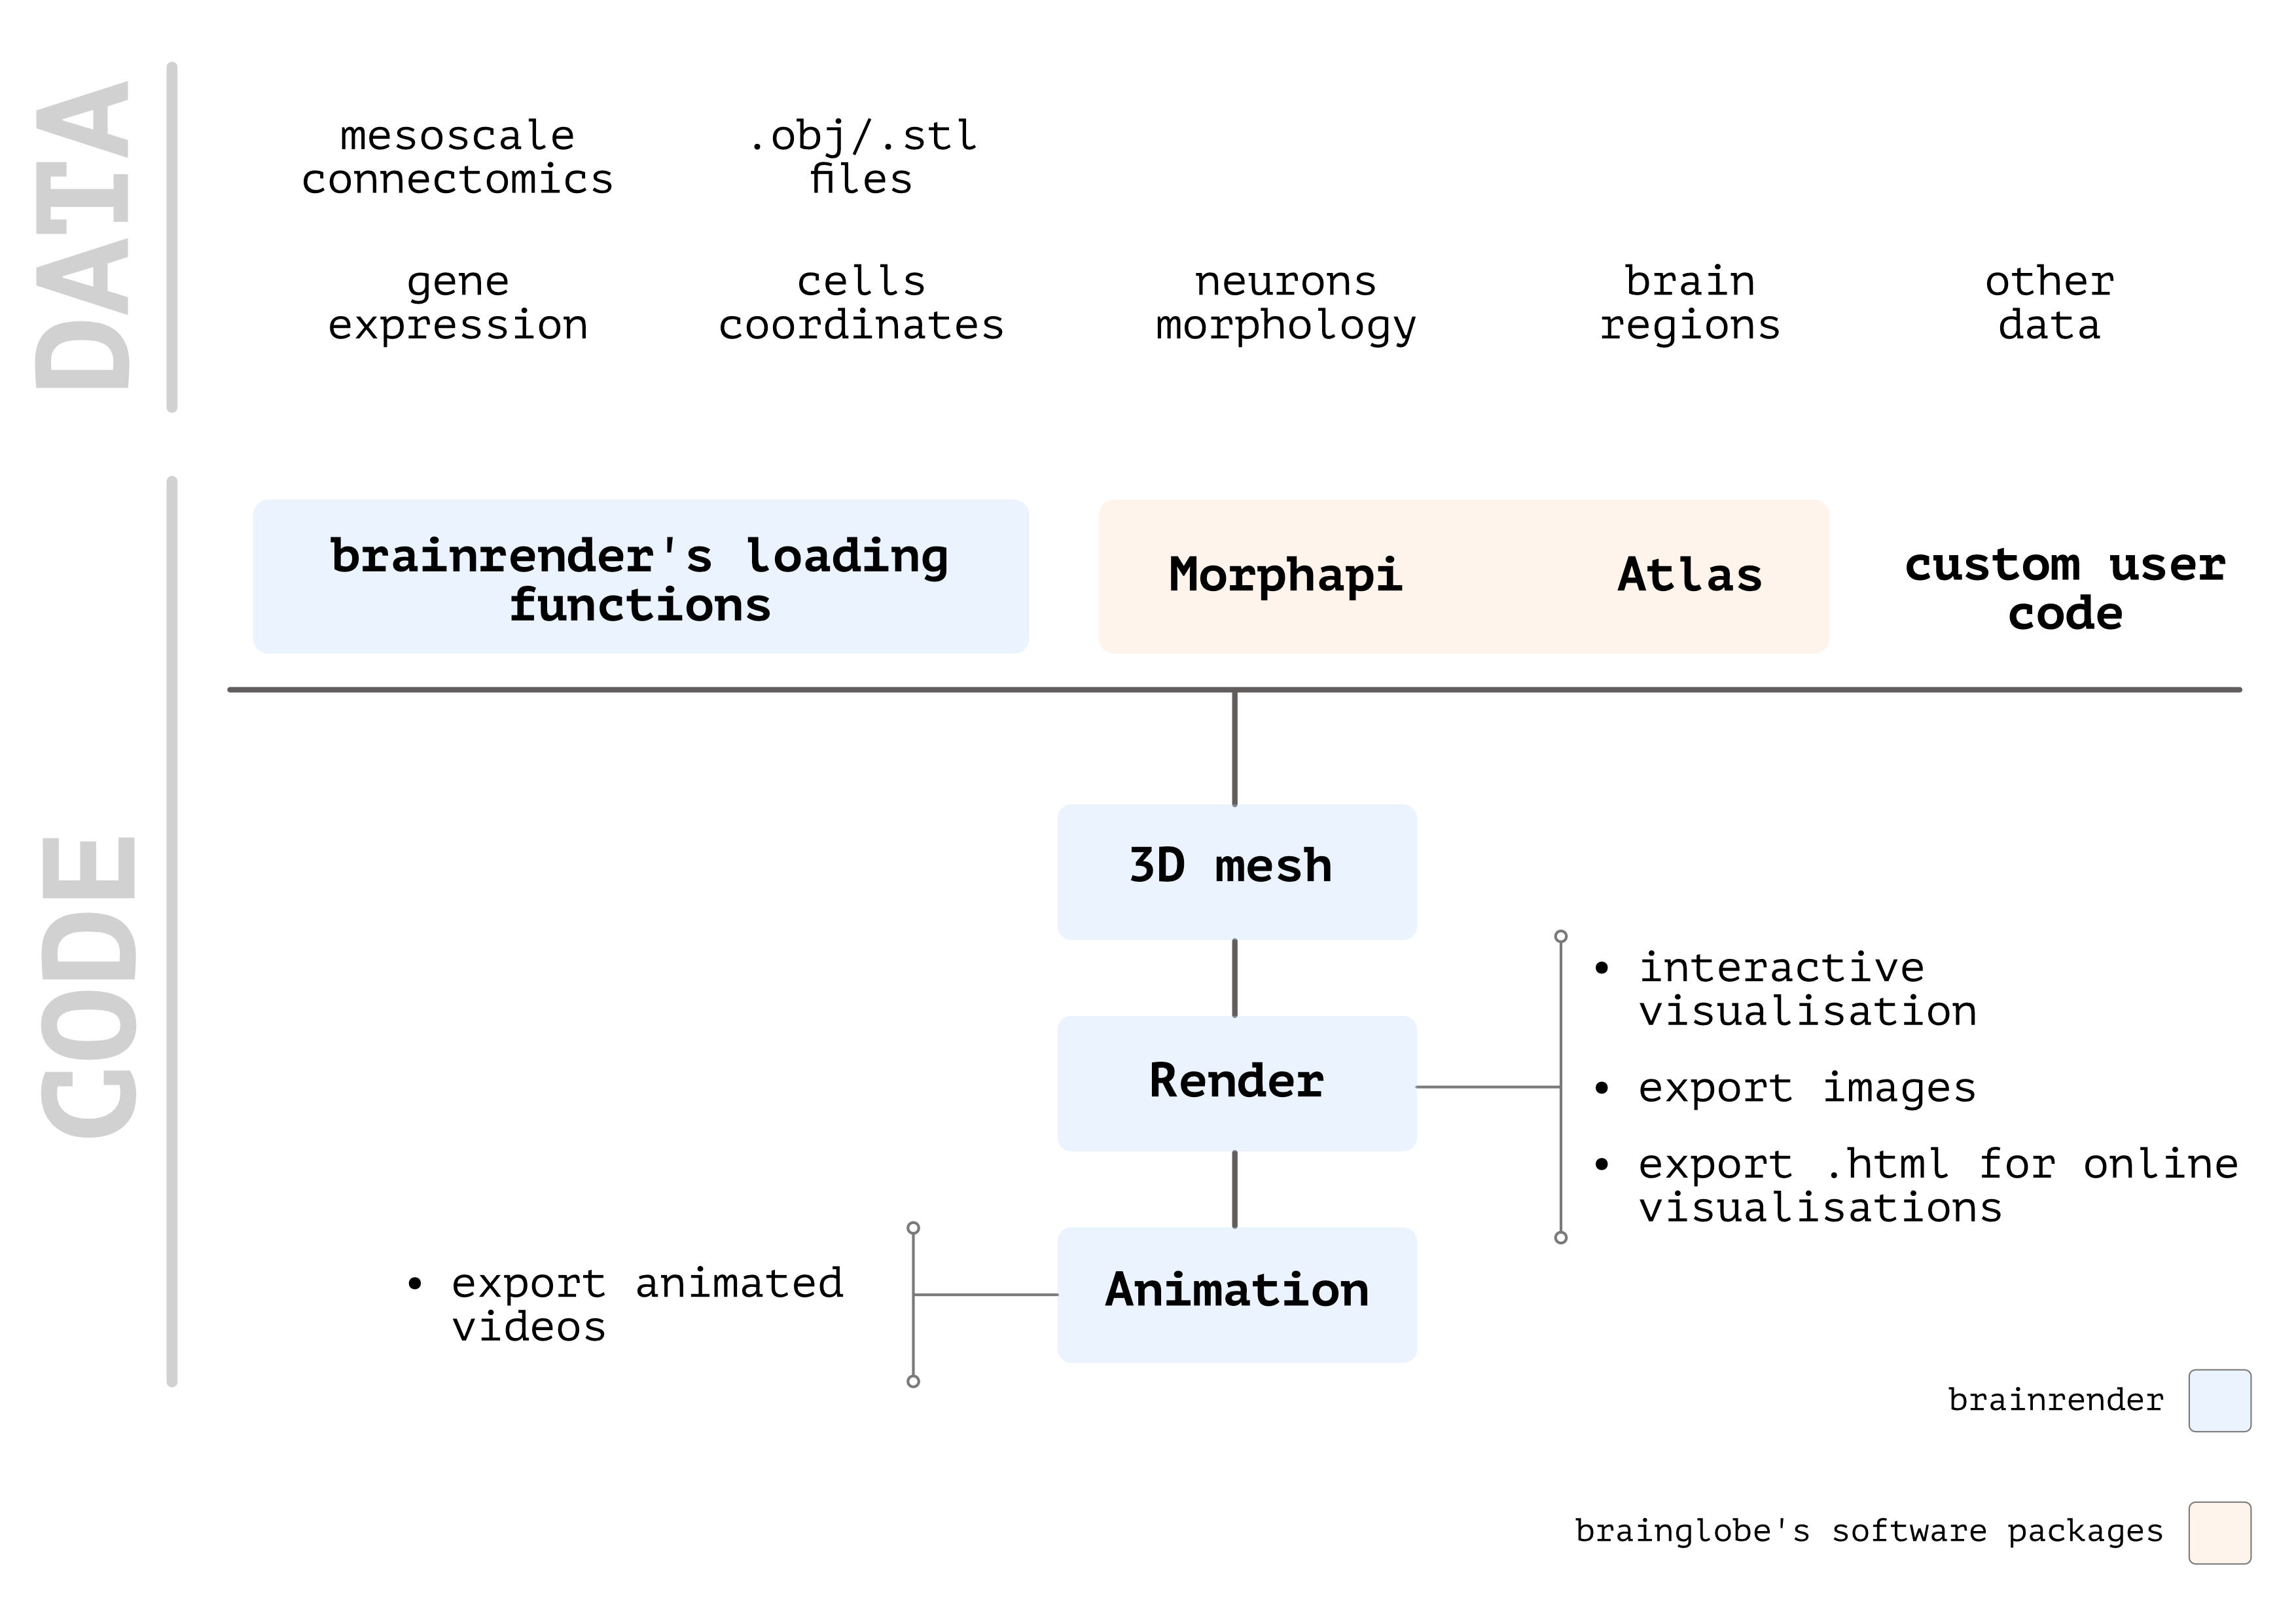 Overview of brainrender's workflow